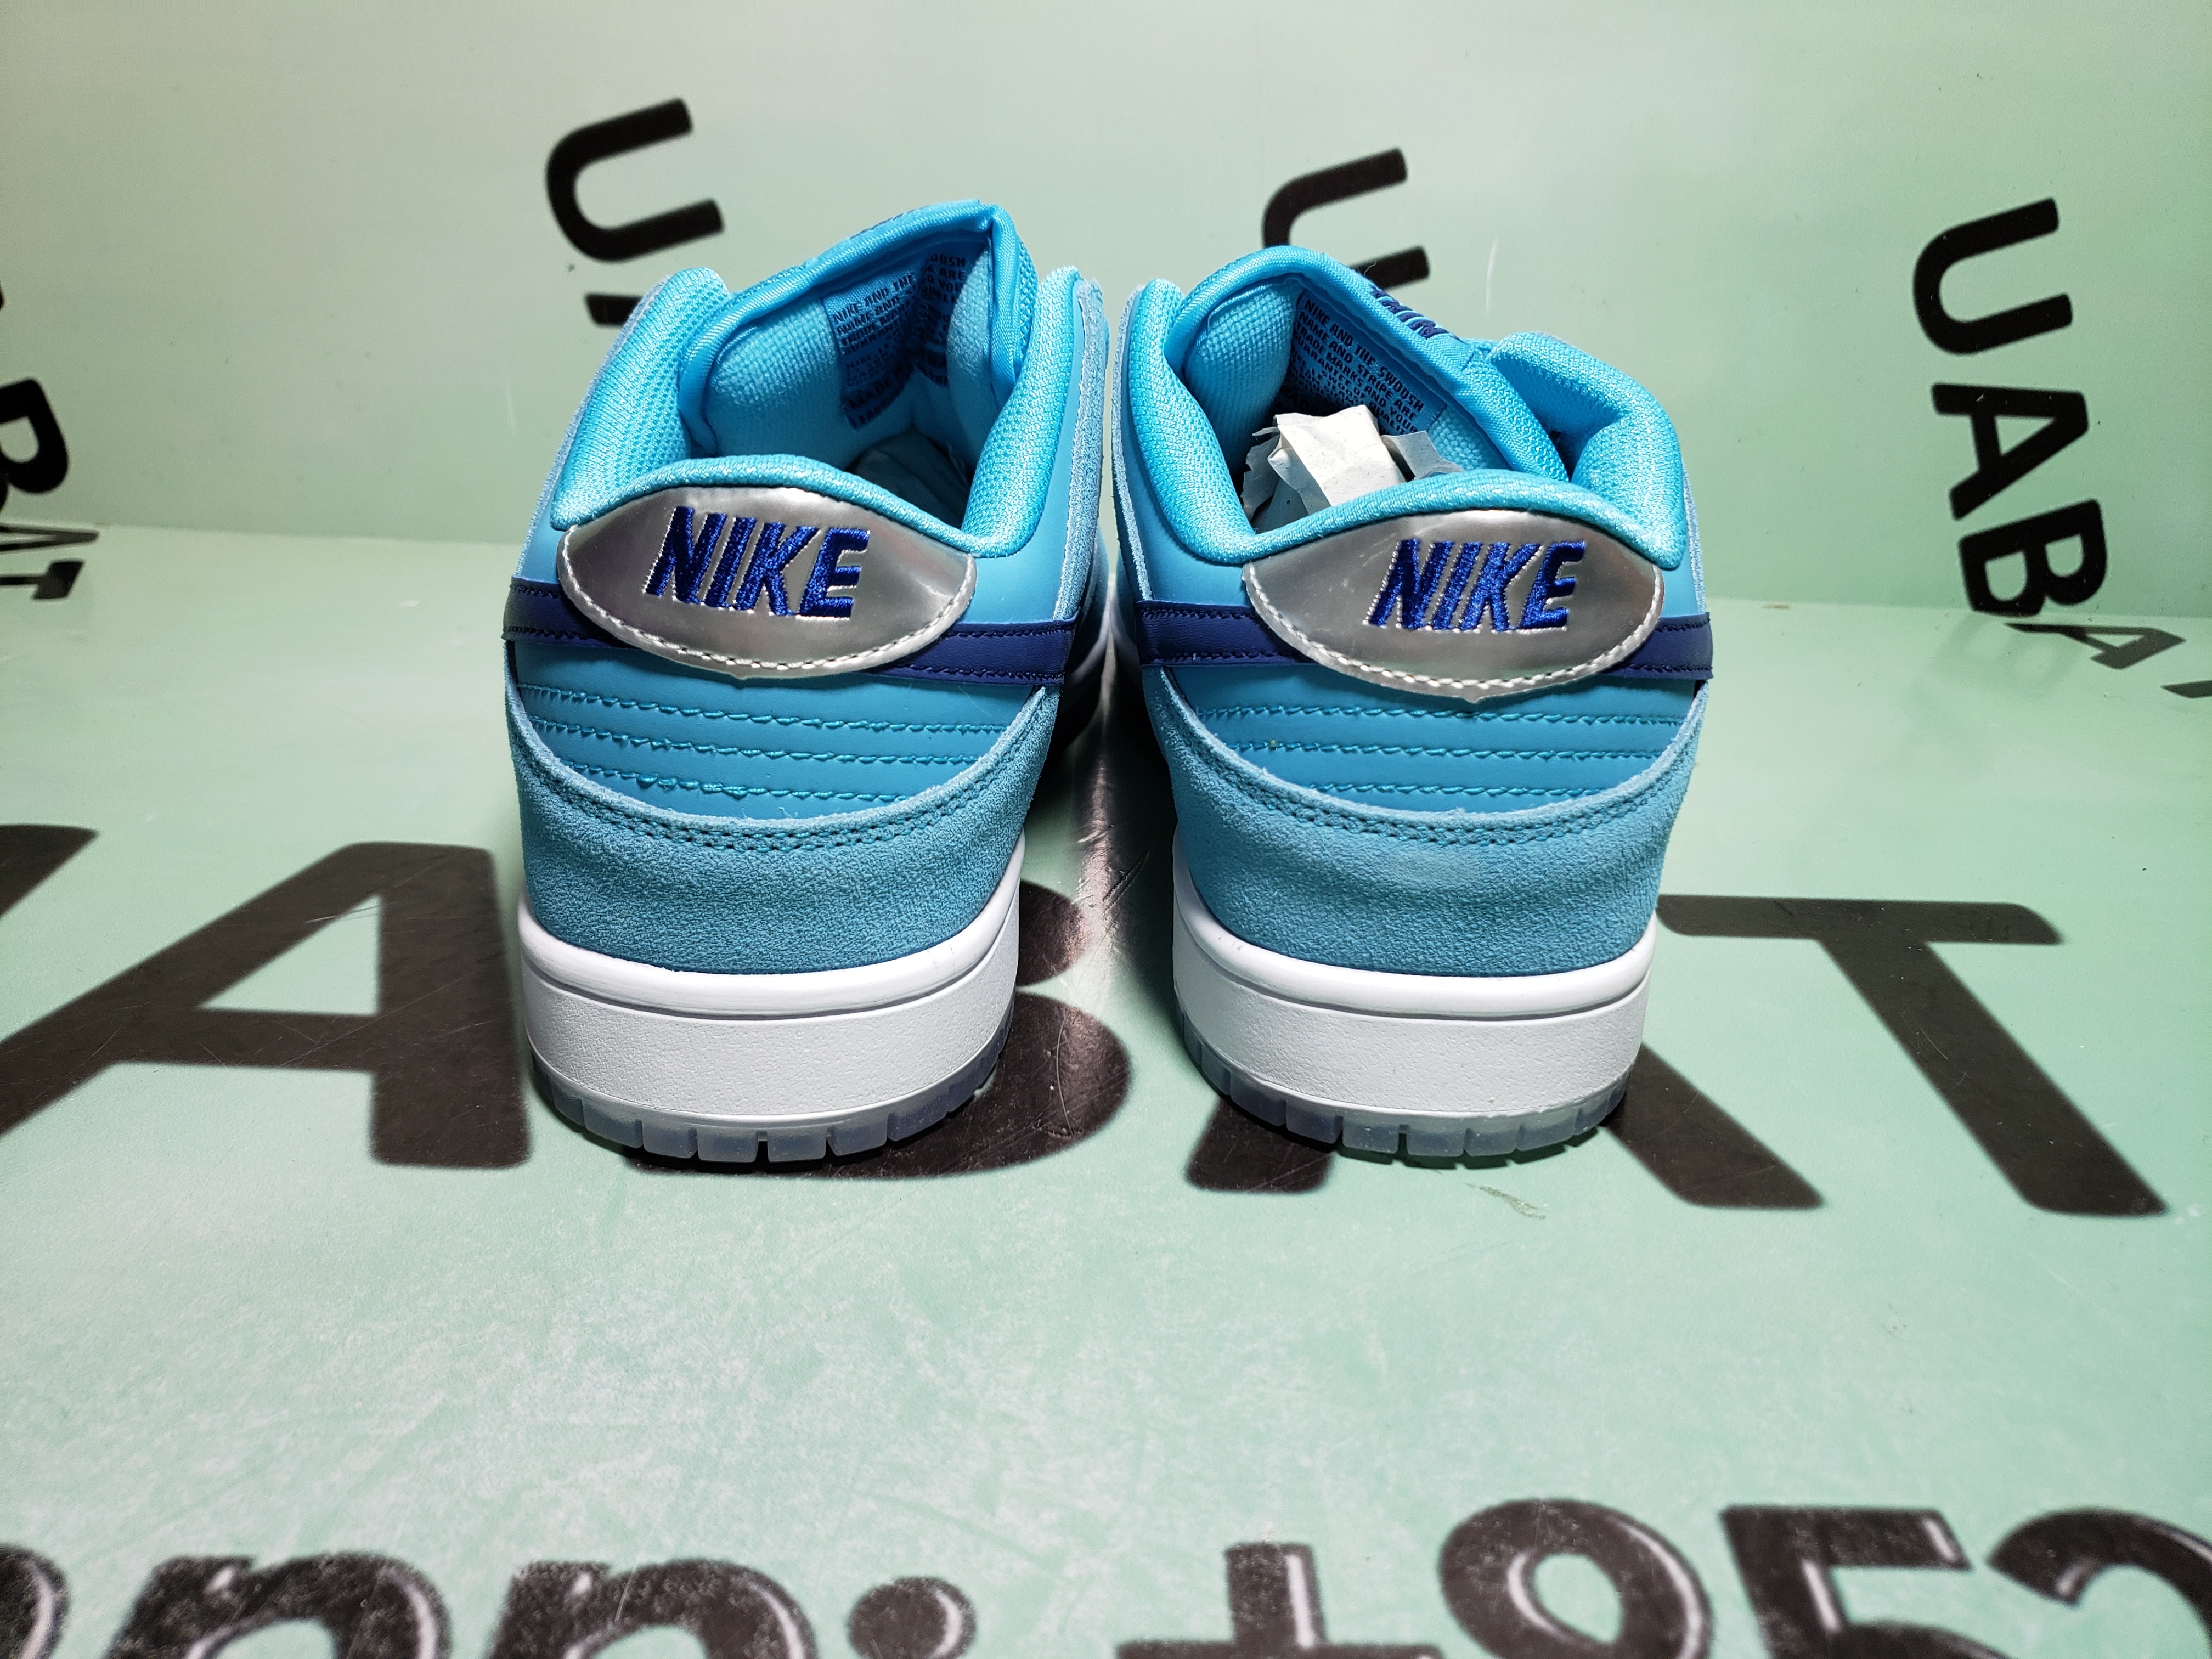 Nike Mens SB Dunk Low Pro BQ6817 400 Blue Fury - Size